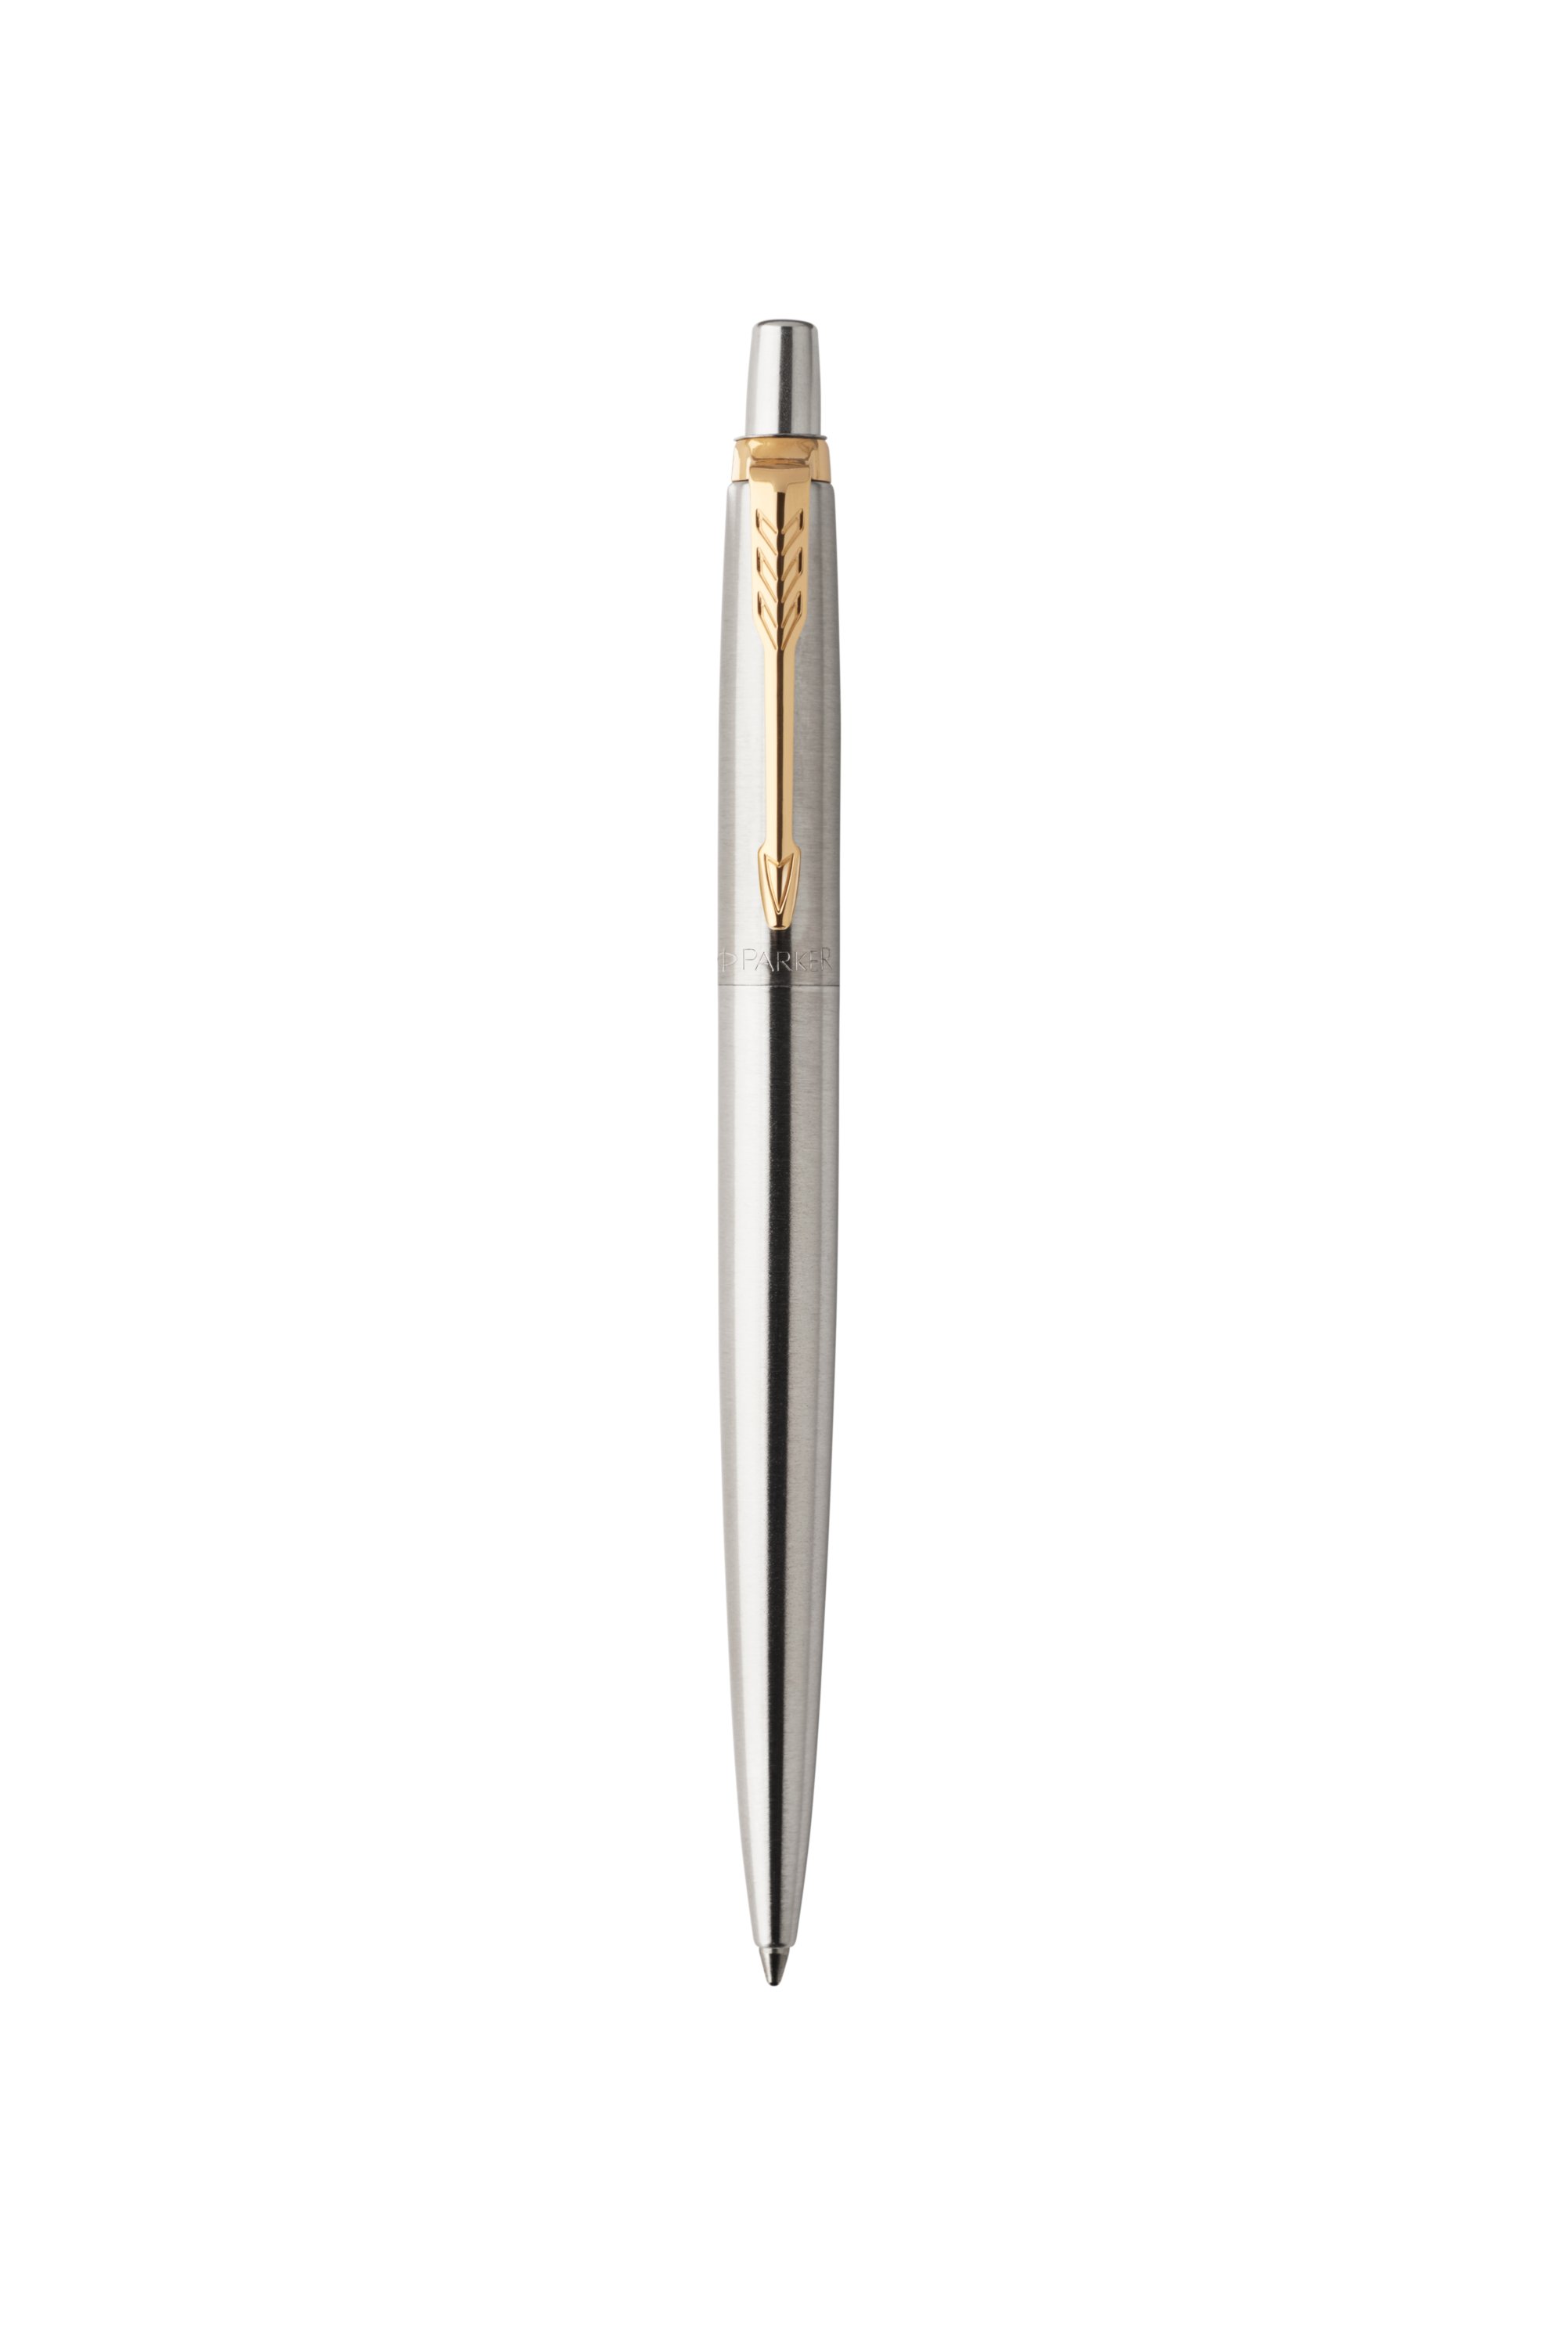 Parker Jotter Stainless Steel Gold Trim BLACK-Fine Point 0.8 mm Ball Point Pen 